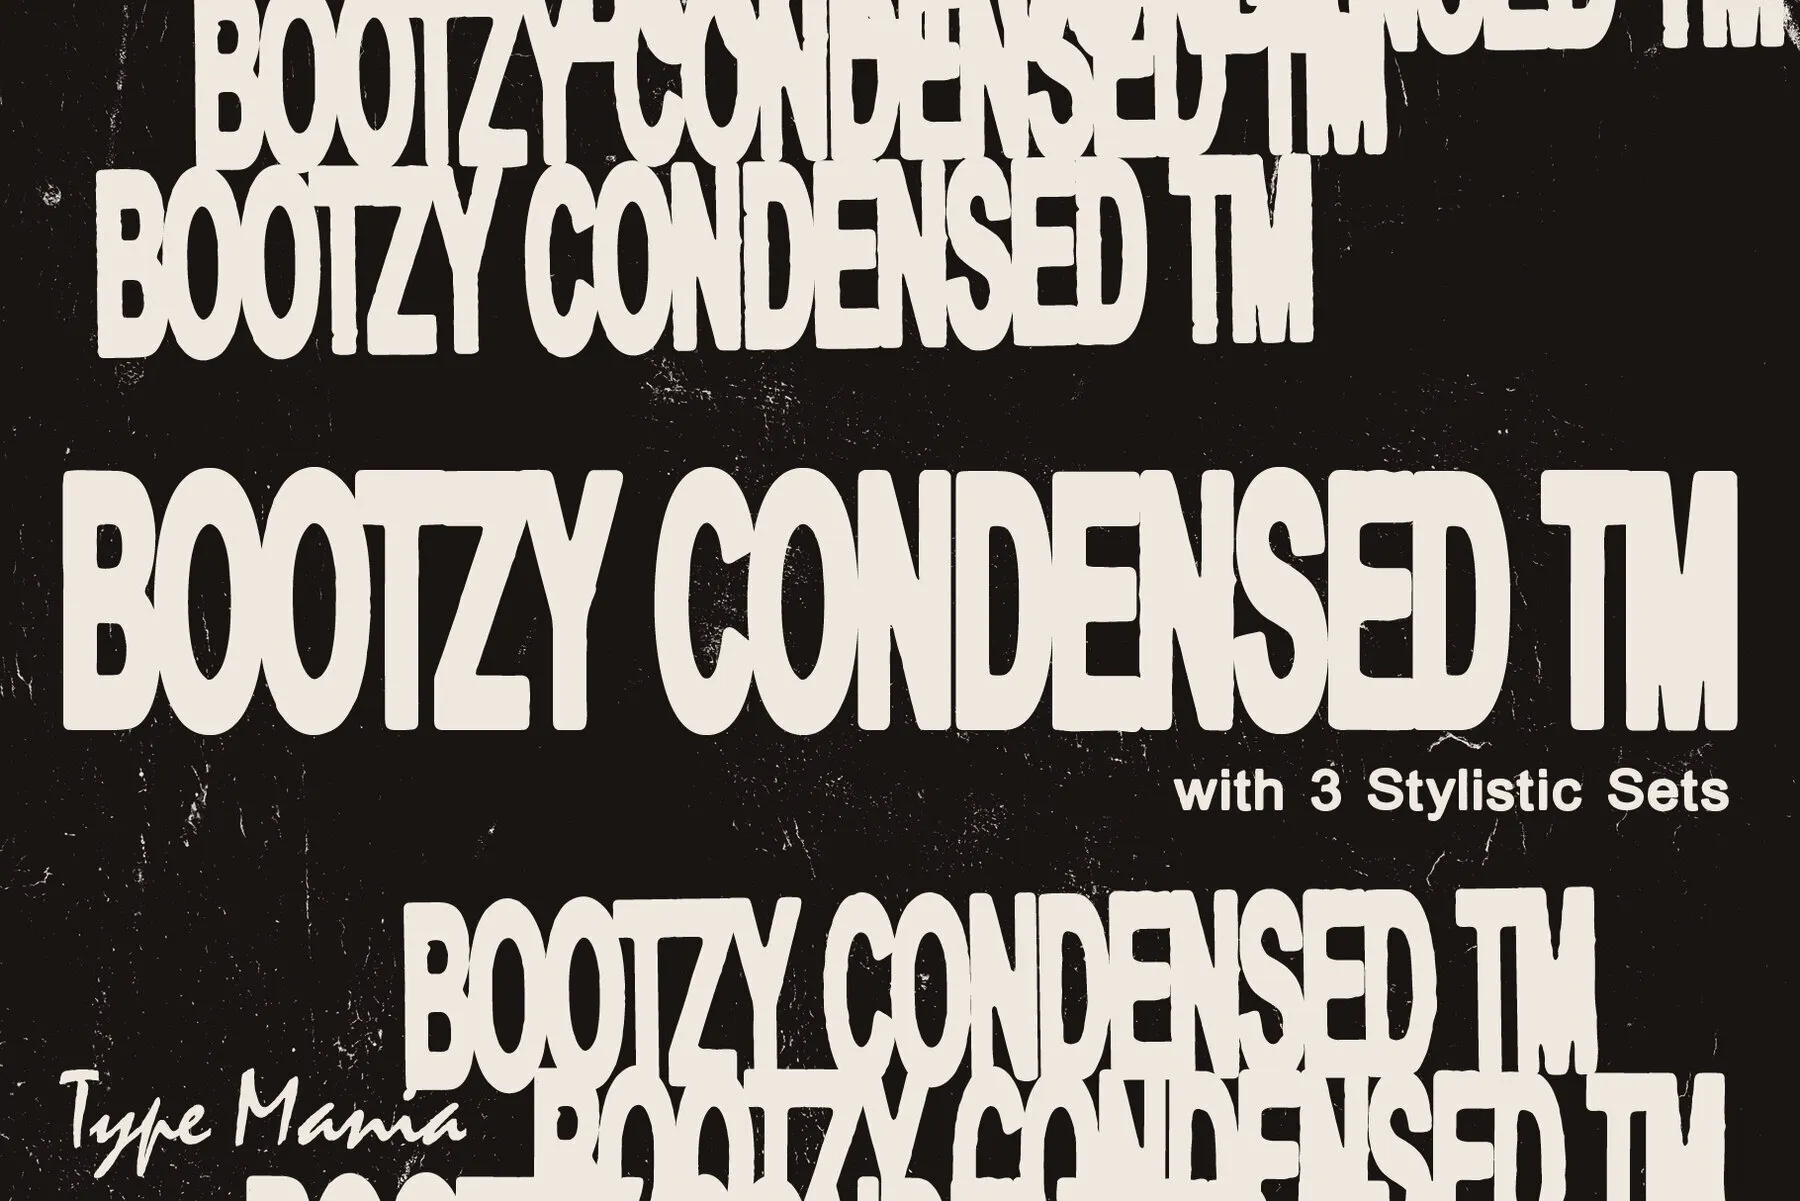 Bootzy Condensed TM